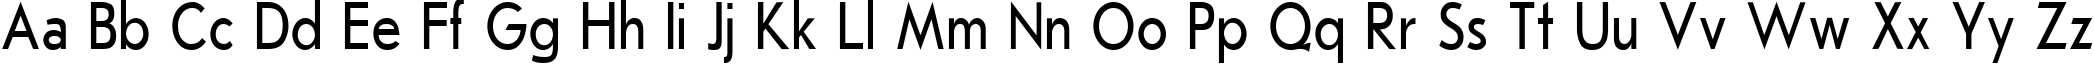 Пример написания английского алфавита шрифтом Journal SansSerif Plain:001.00180nh